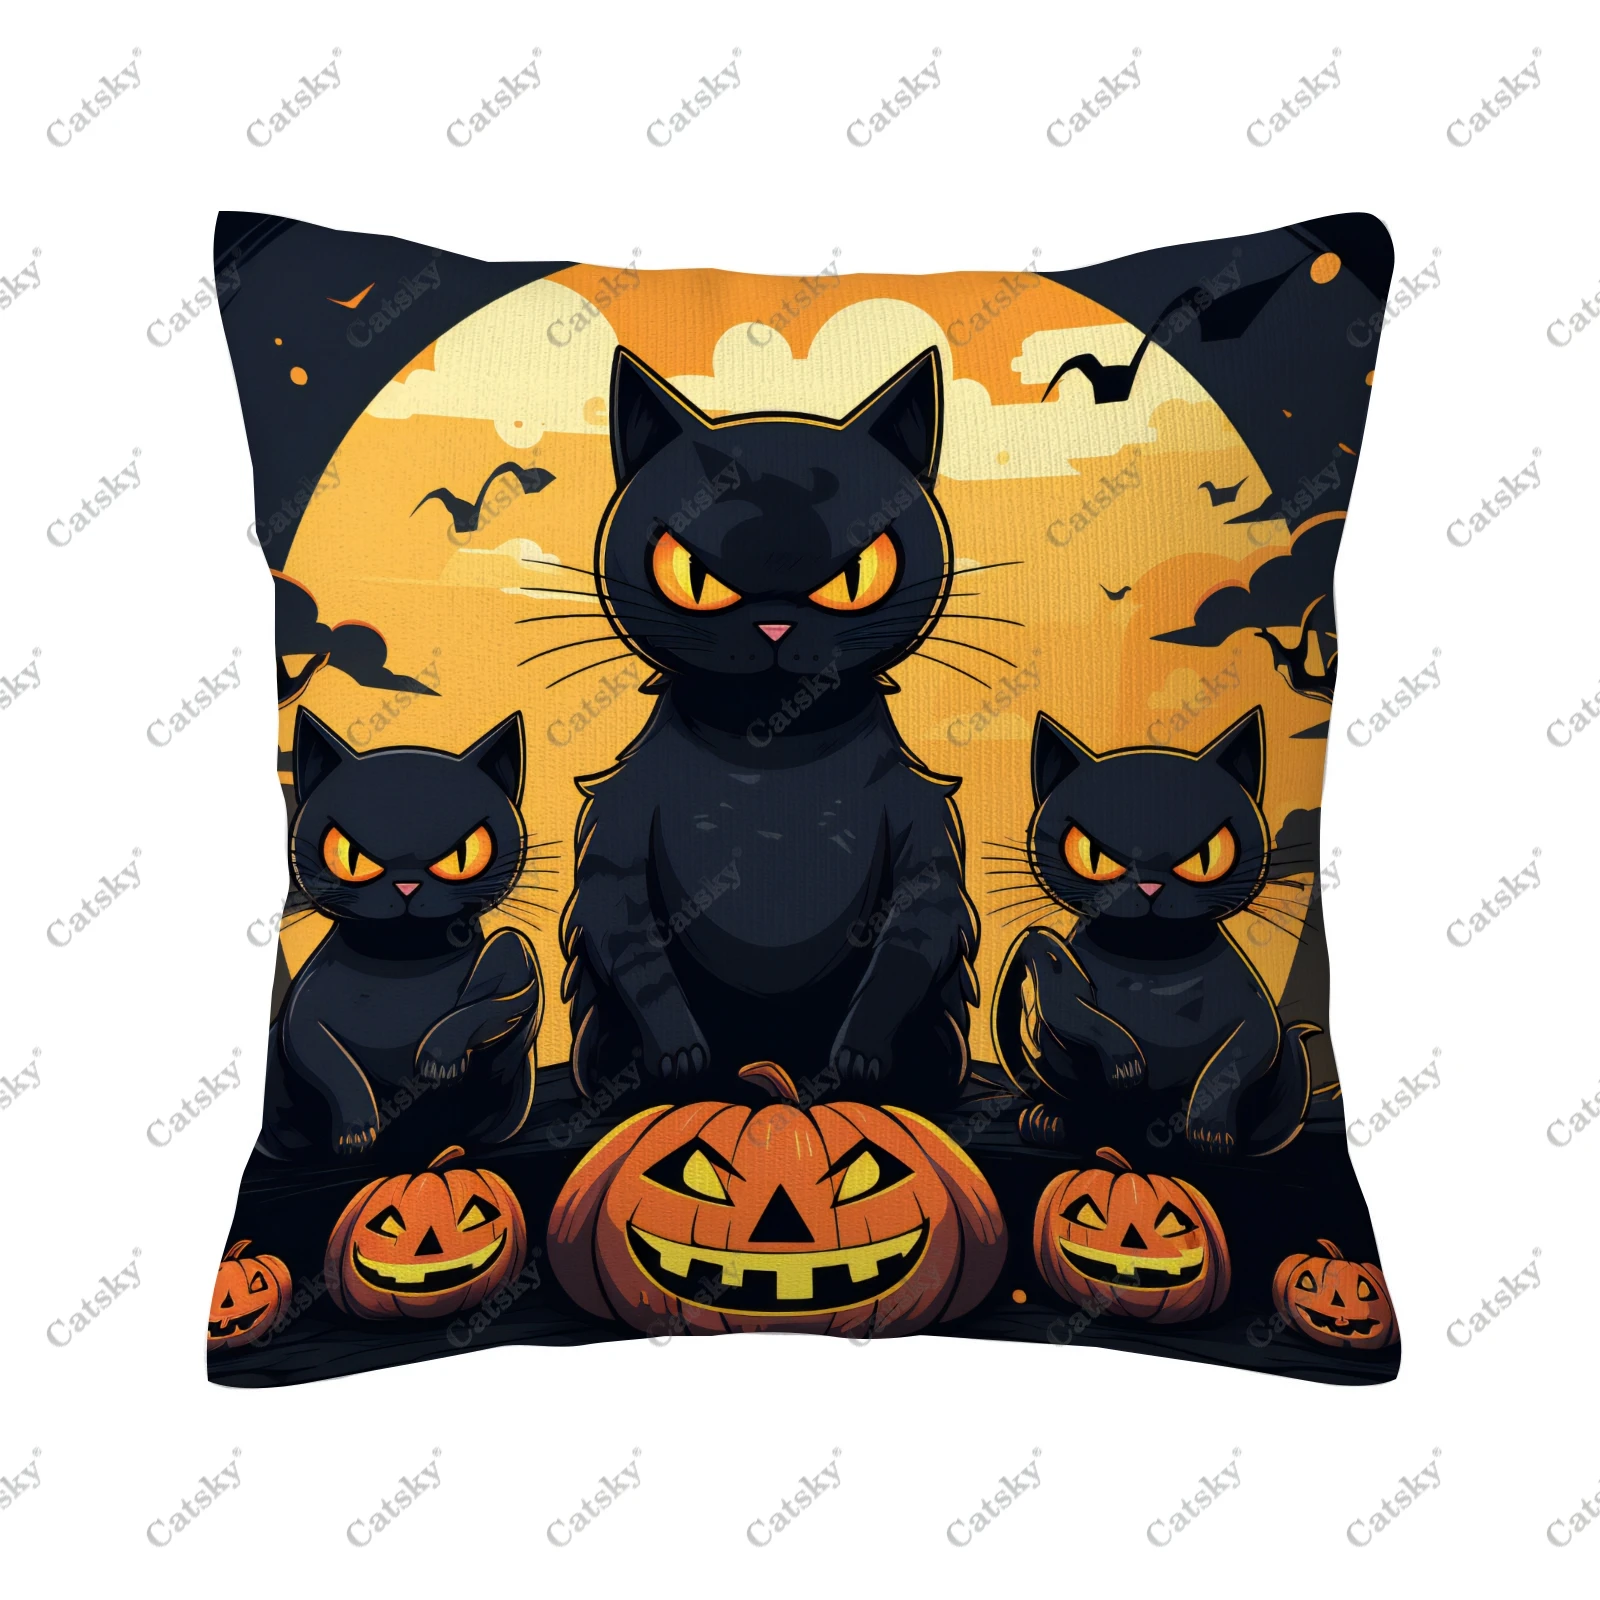 

Чехол для подушки на Хэллоуин с ужасными кошками, наволочка, крутая декоративная подушка в виде фигурки Asta, для домашнего декора, чехол для дивана, автомобиля, подушки для кровати